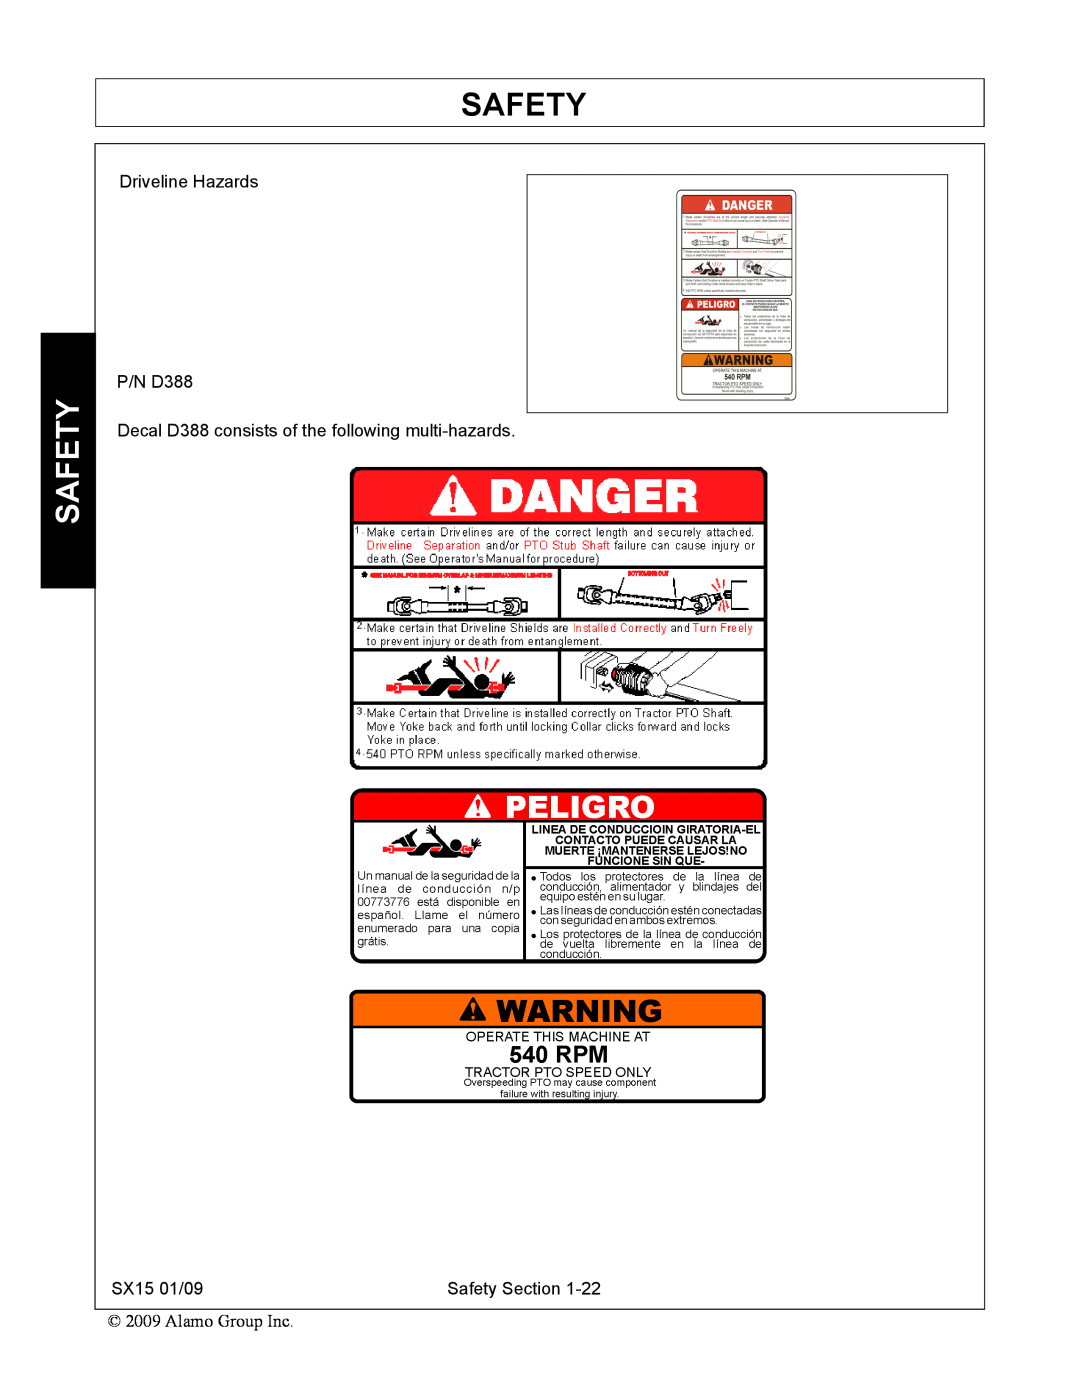 Alamo SX15 manual Safety 